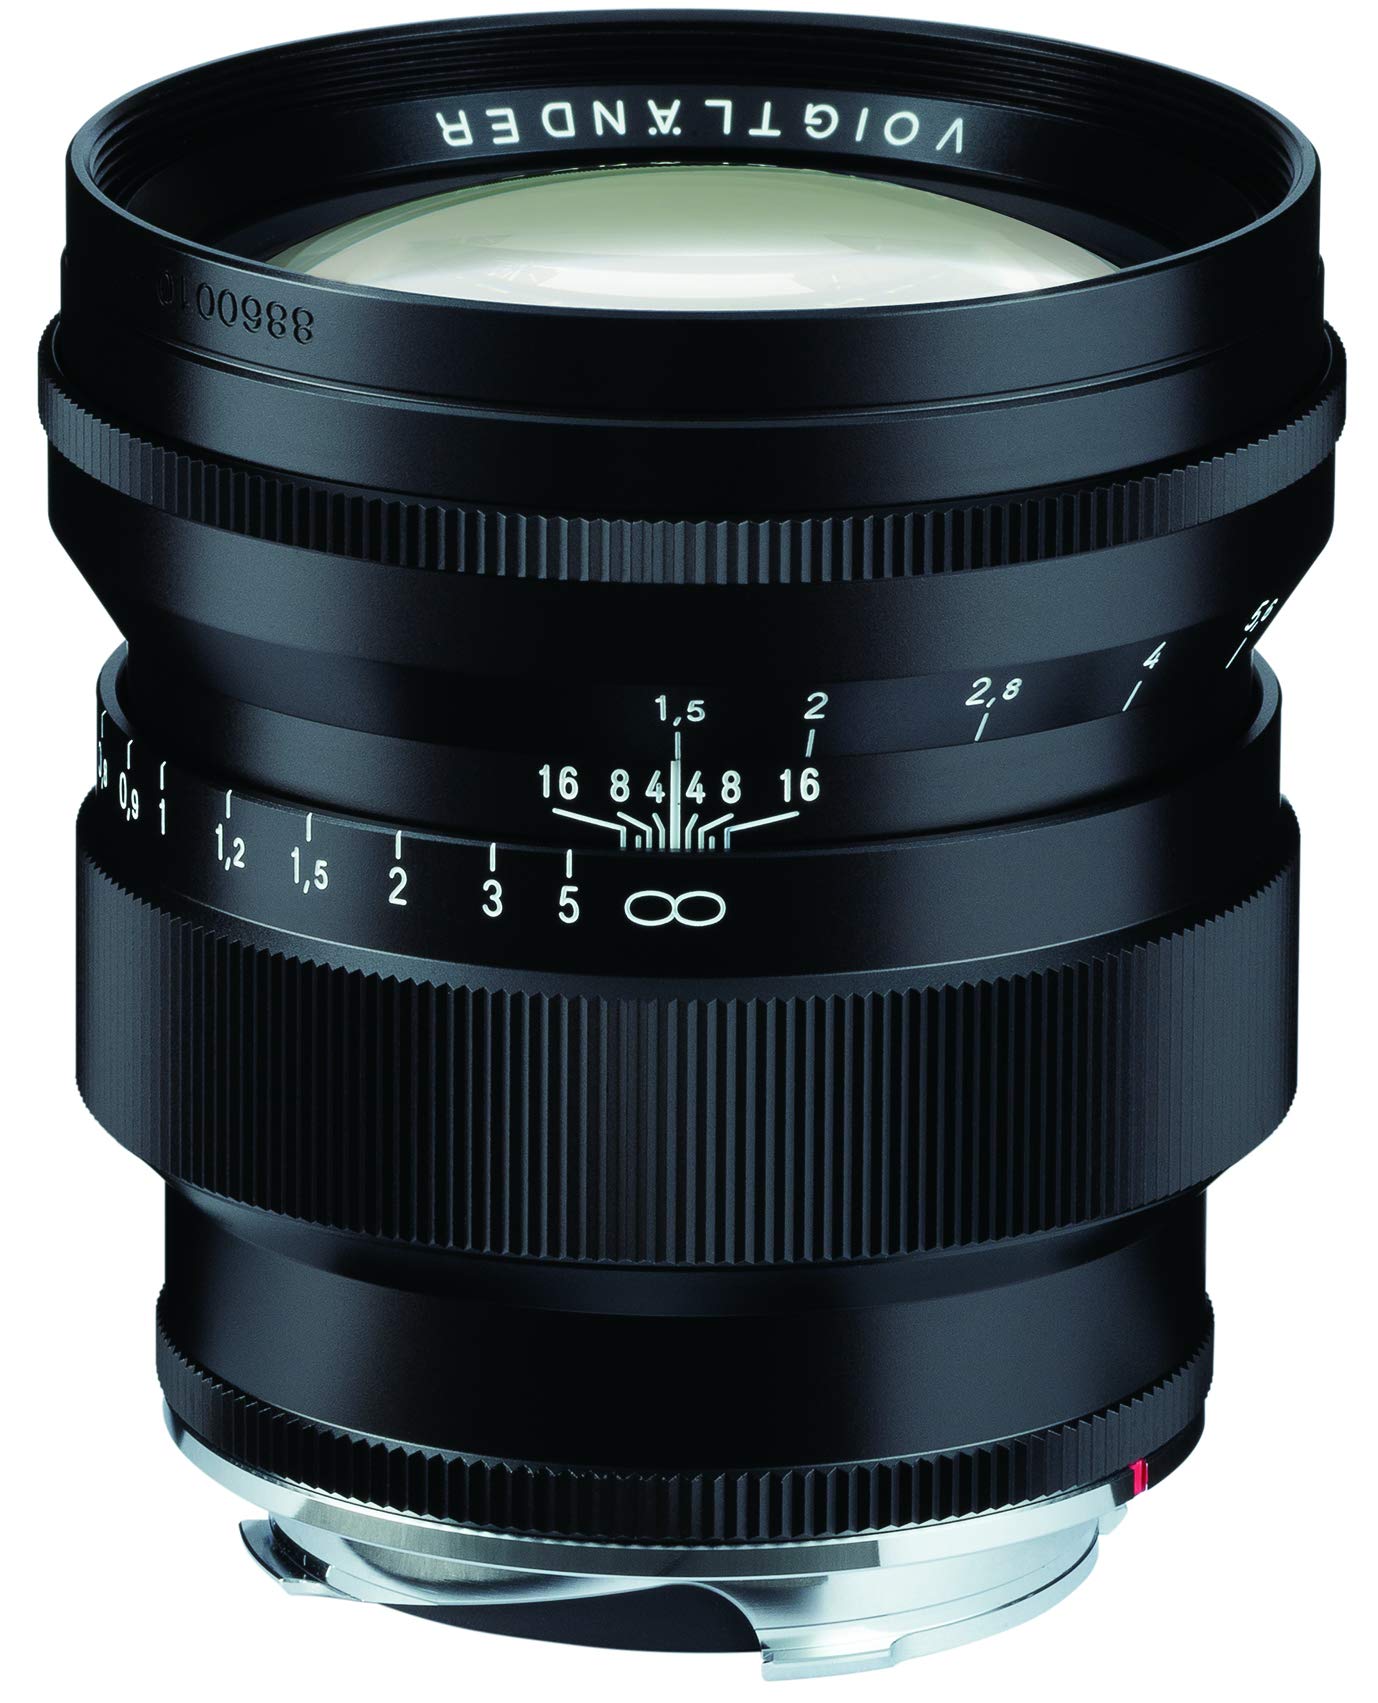 Voigtlander 75mm f/1.5 Nokton Aspherical VM Lens for Leica M, Black